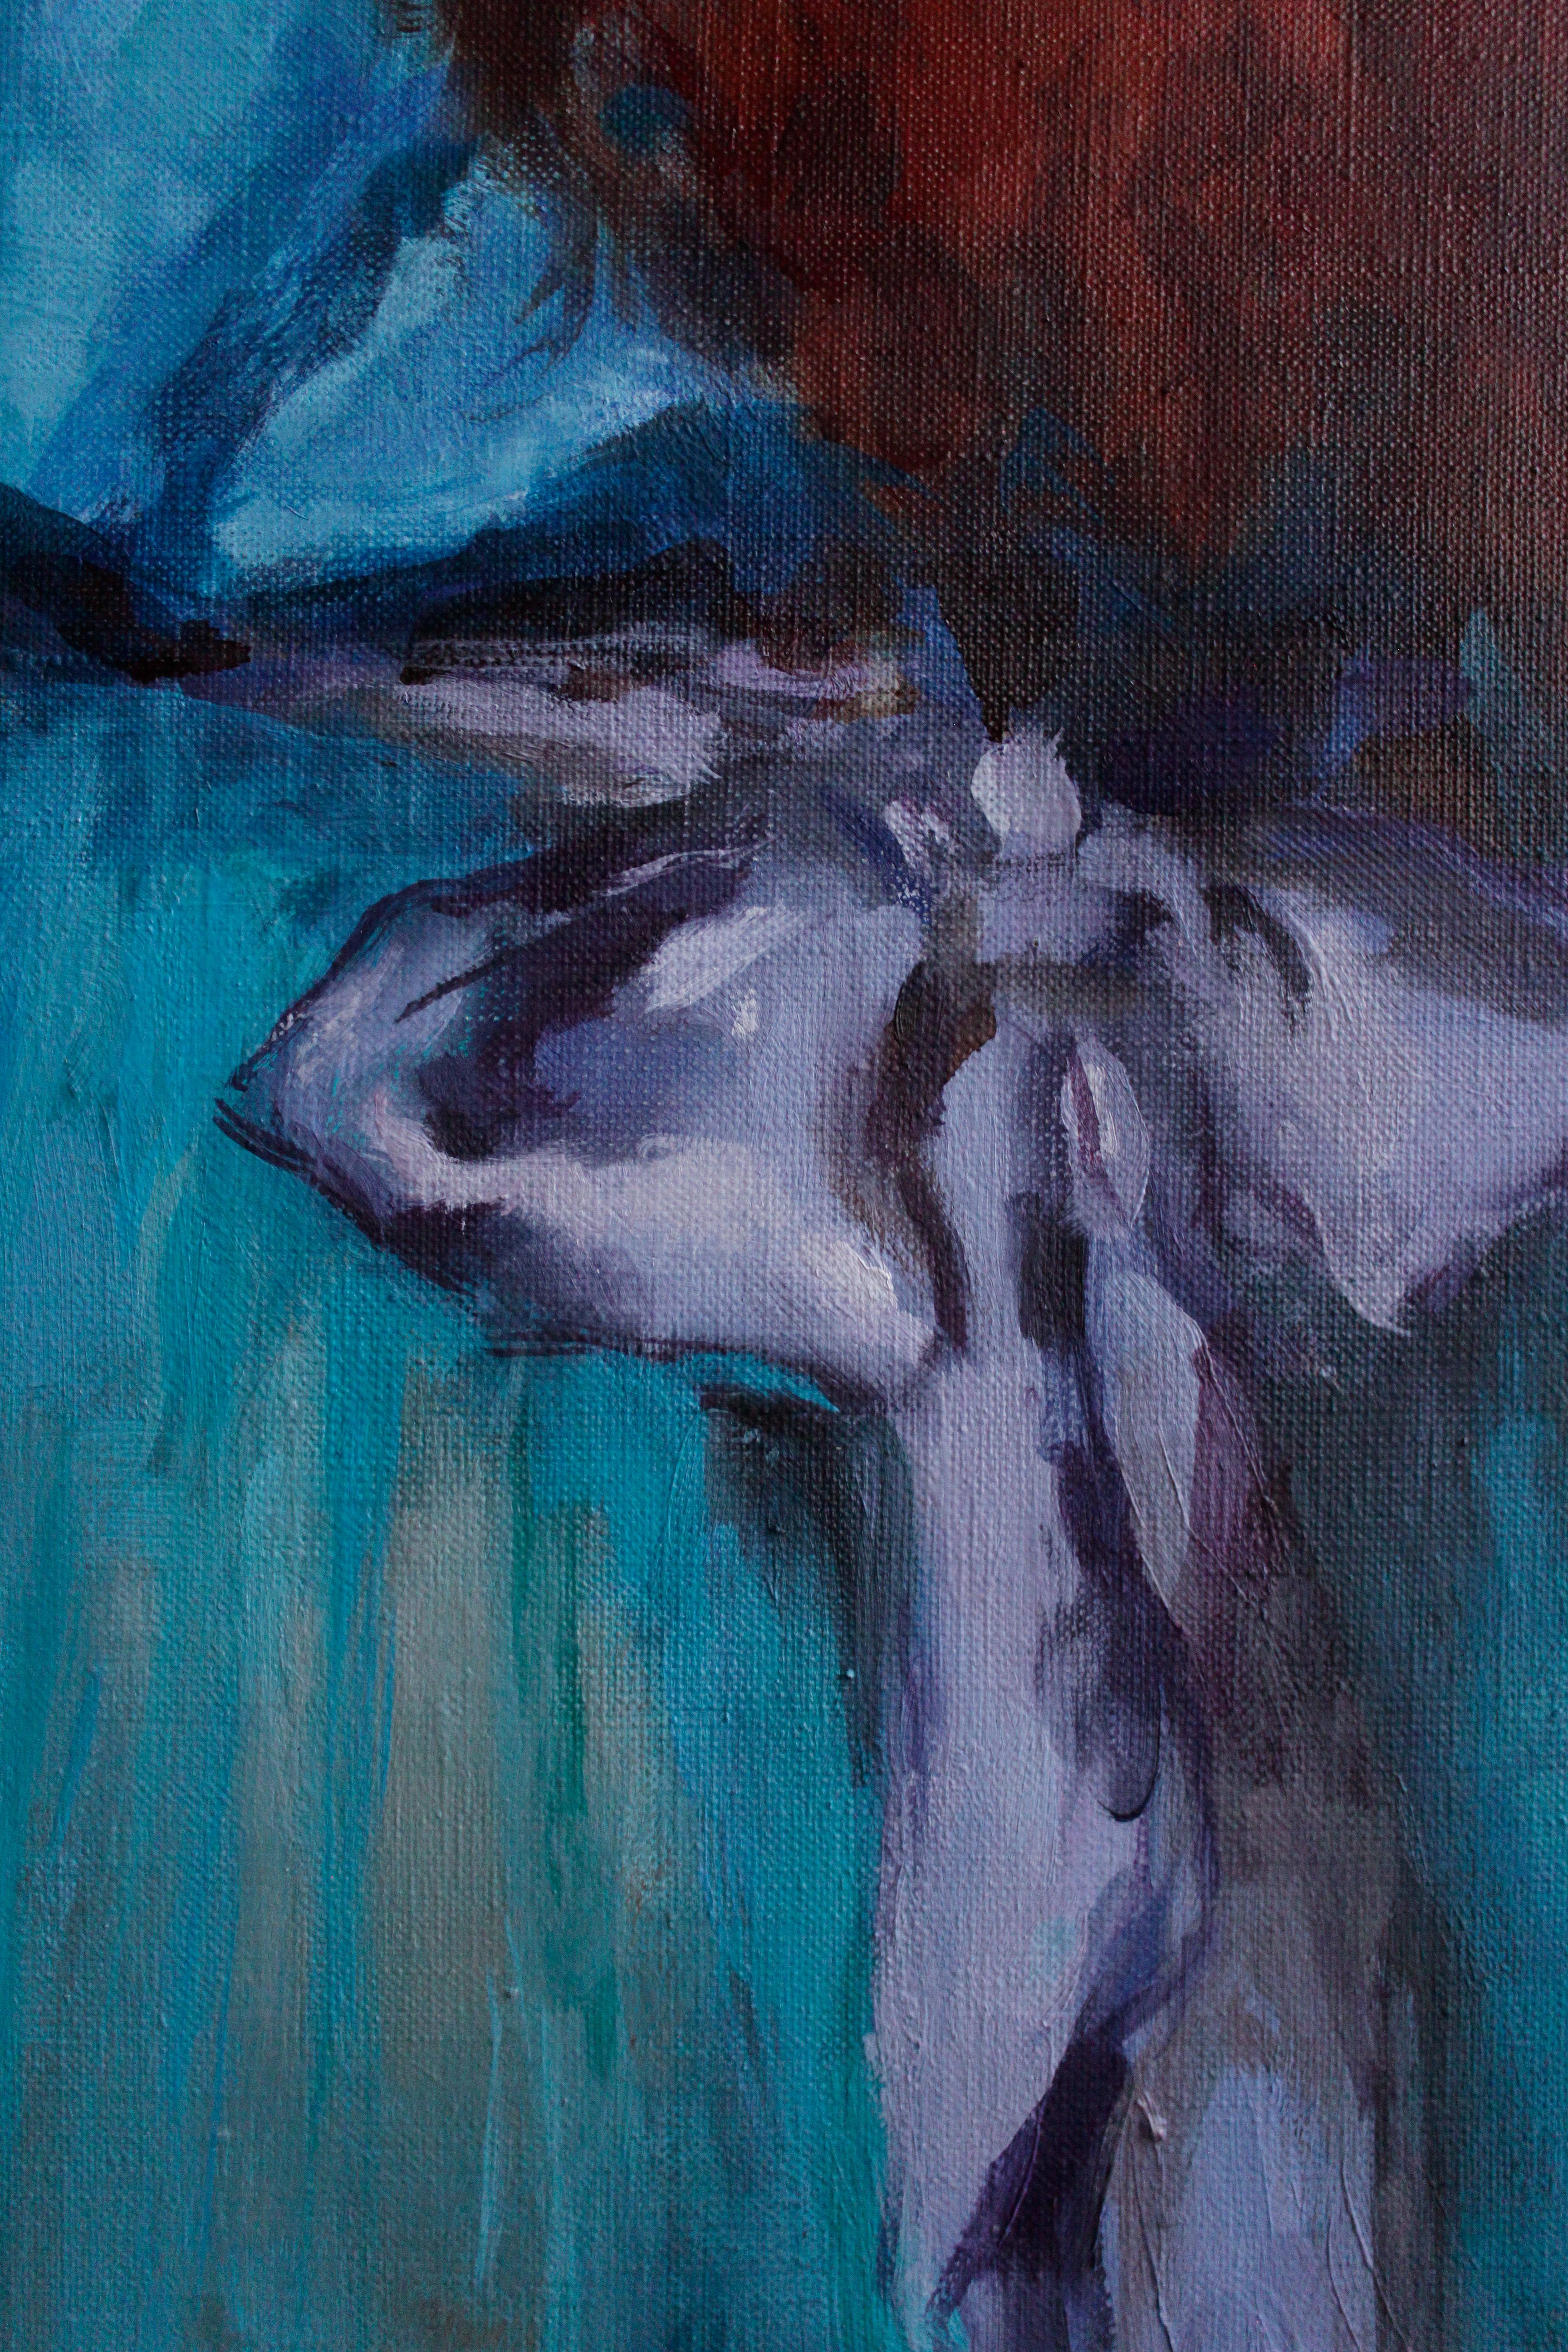 Ballerinas in Blue Tutus - 21st Century Contemporary Realism Oil Painting 1